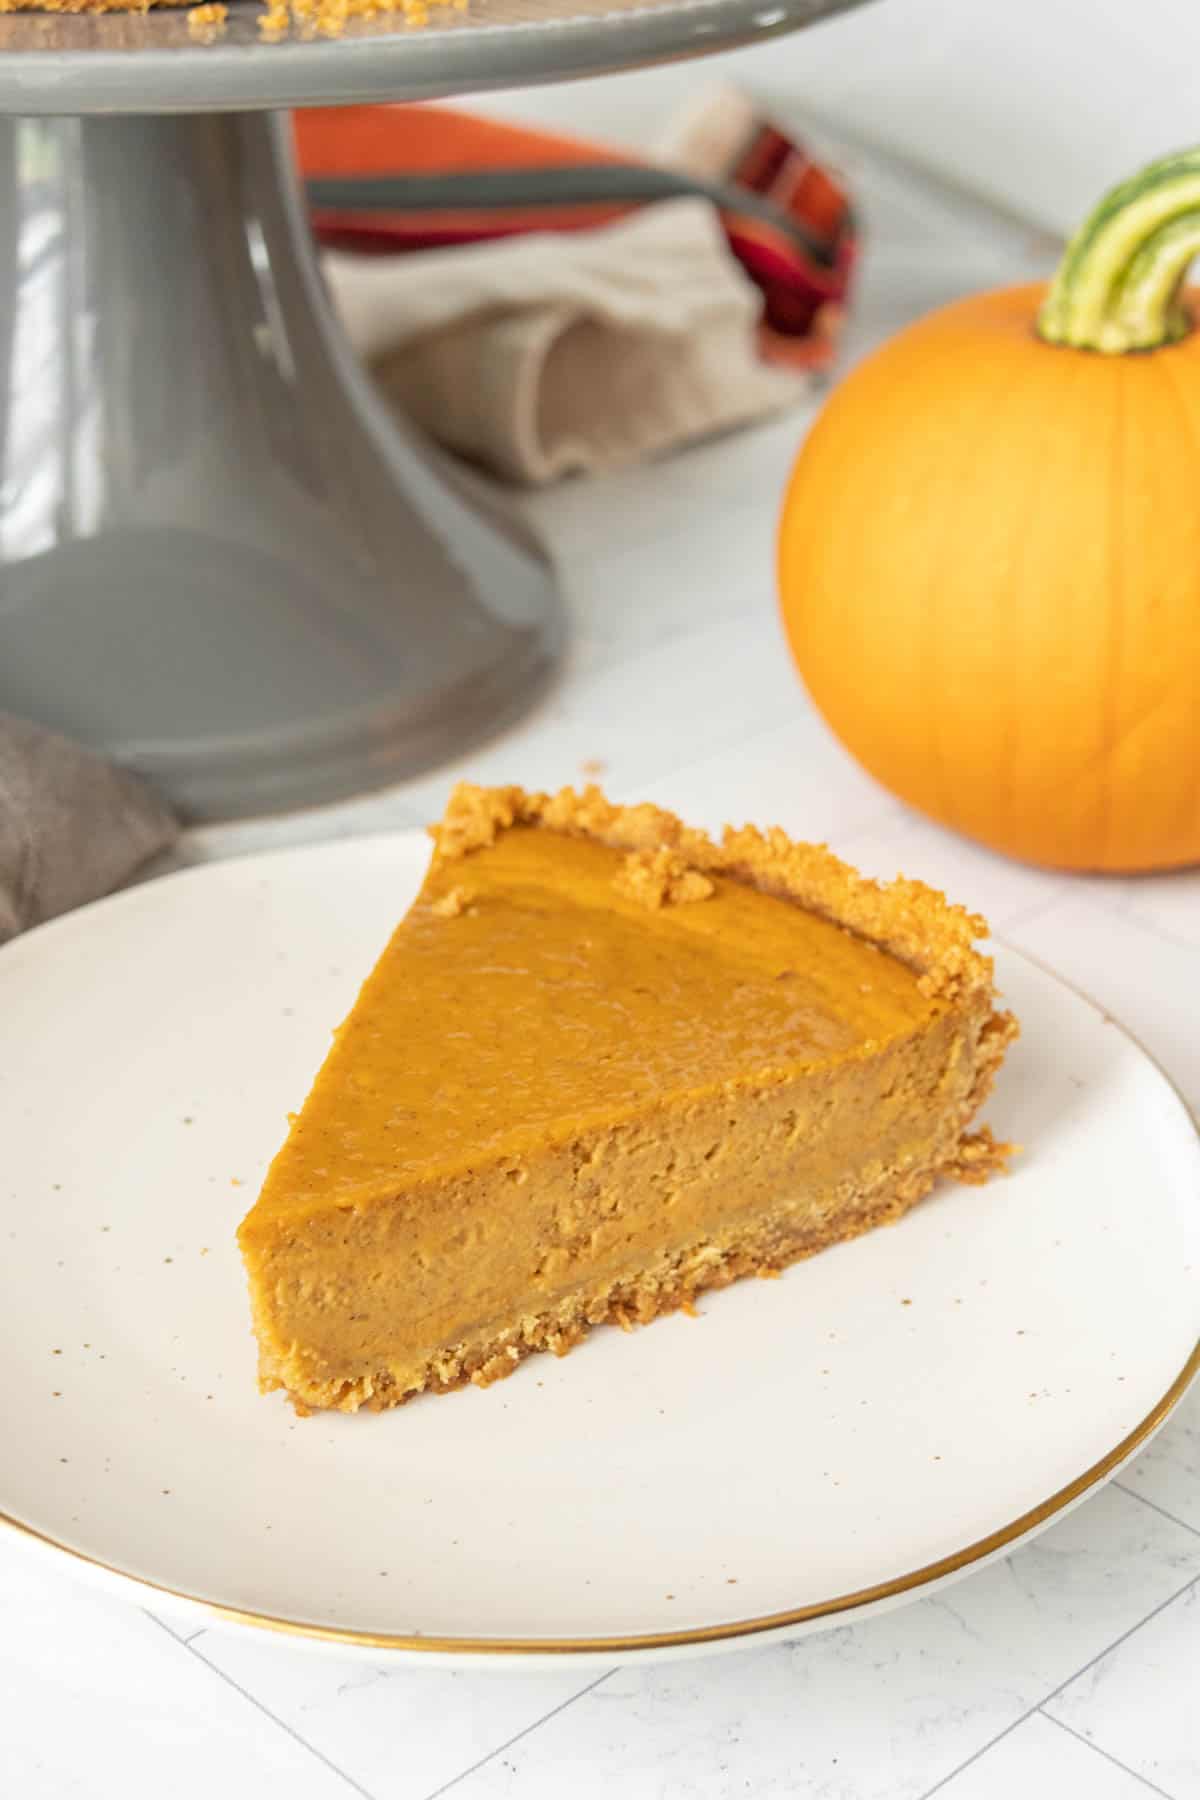 A slice of pumpkin pie on a plate.